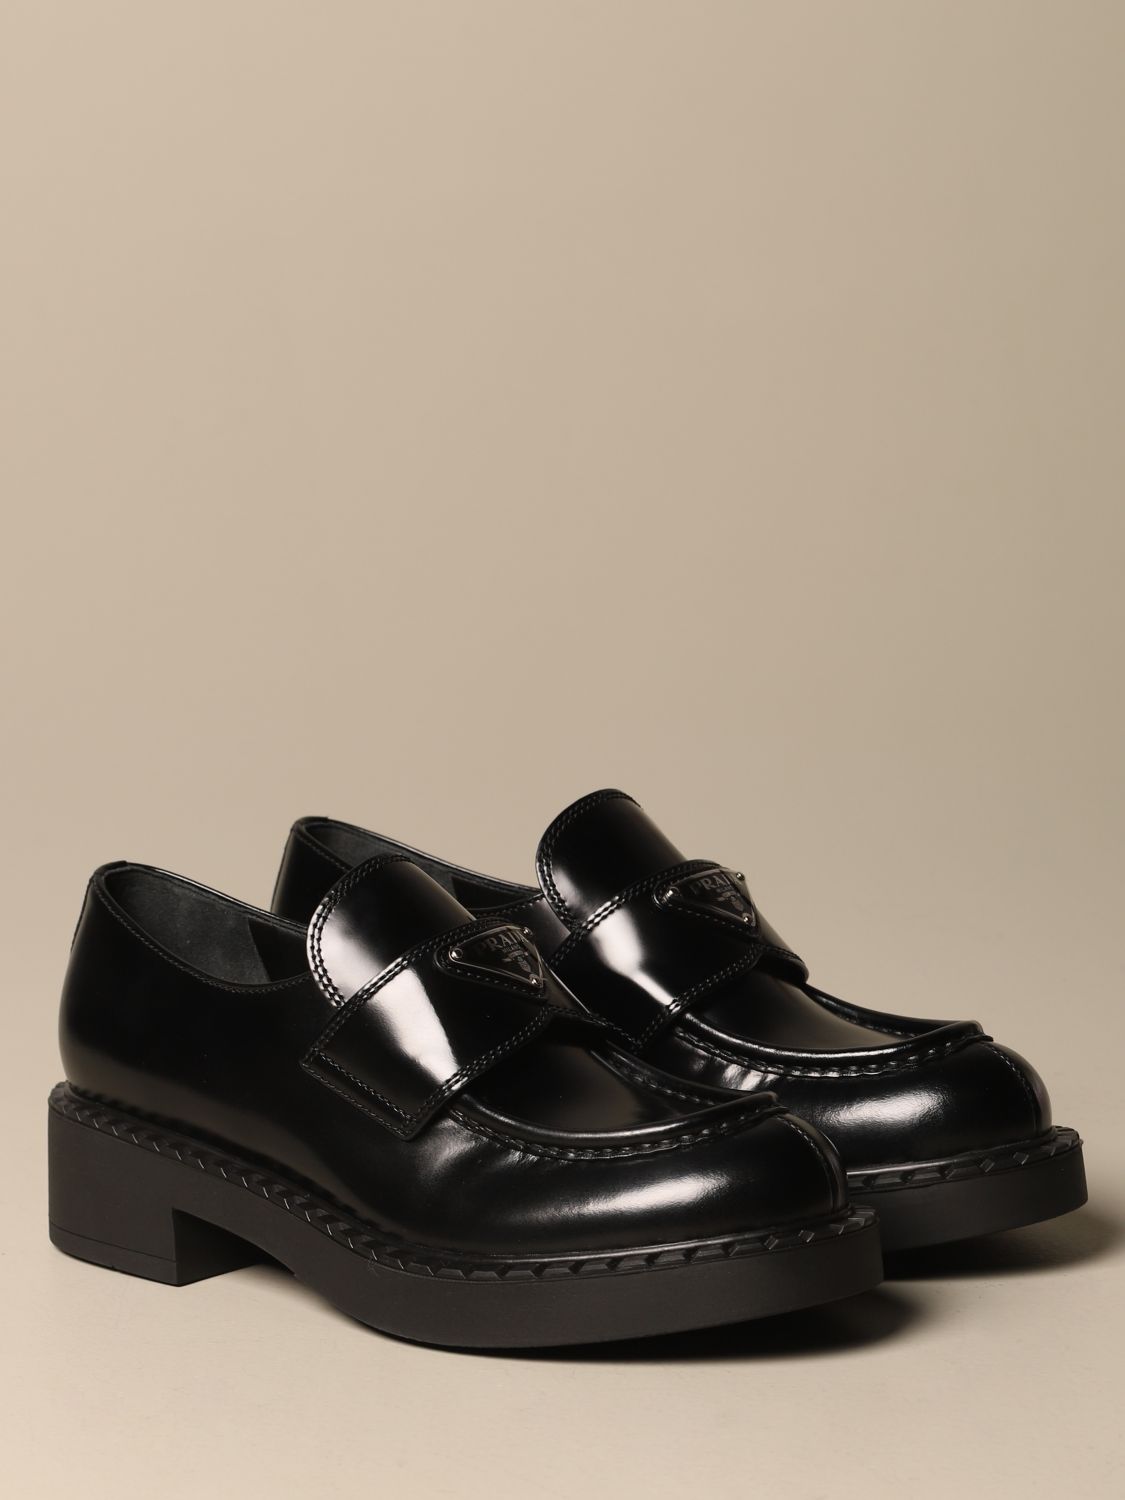 Buy > prada logo leather loafers > in stock